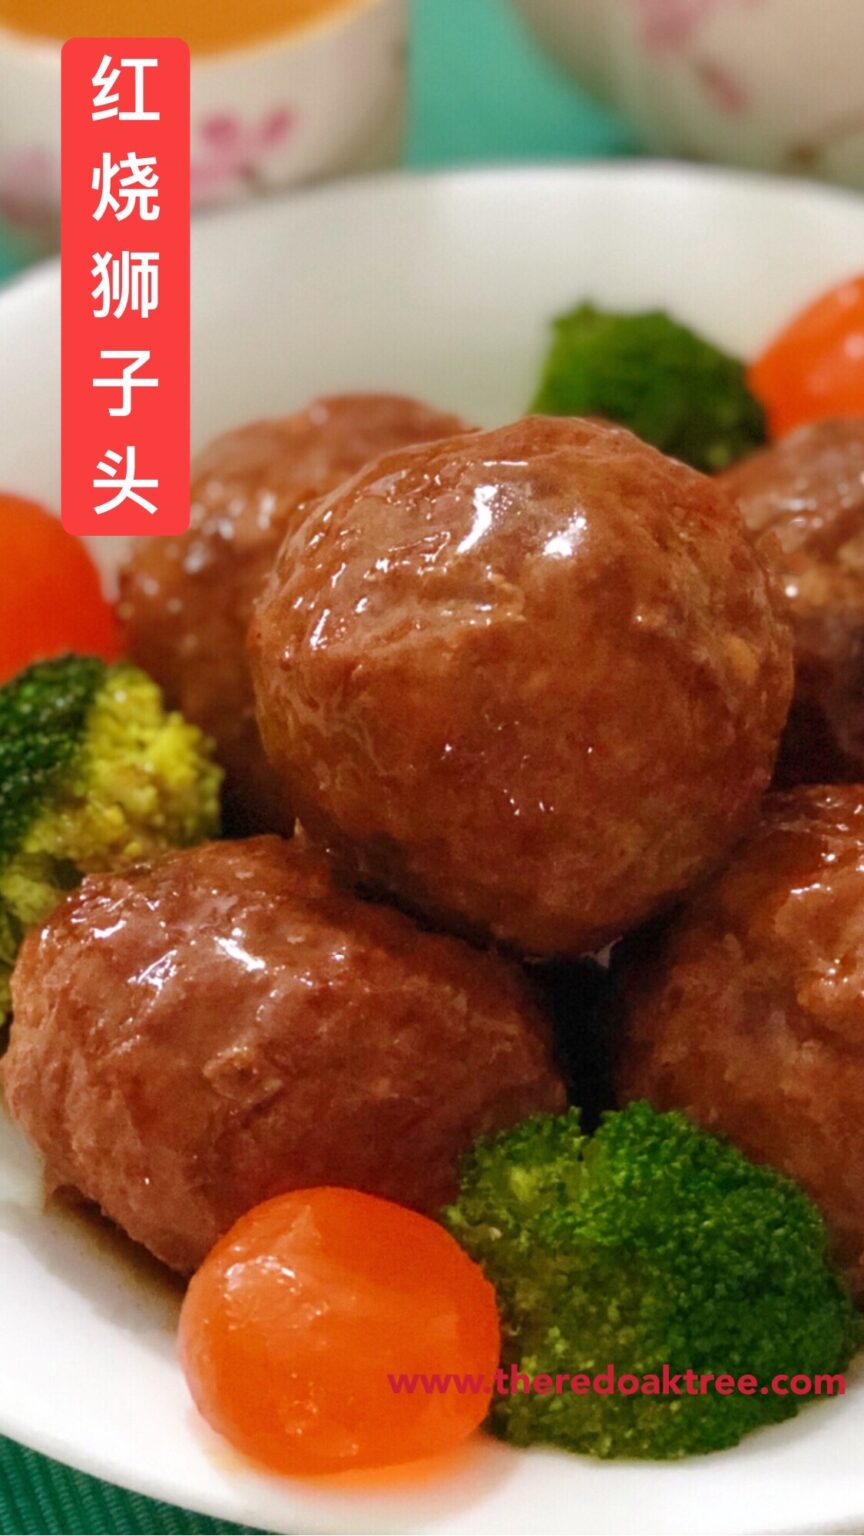 Lion Head Meatballs : Four Happiness Meatballs - The Red Oak Tree